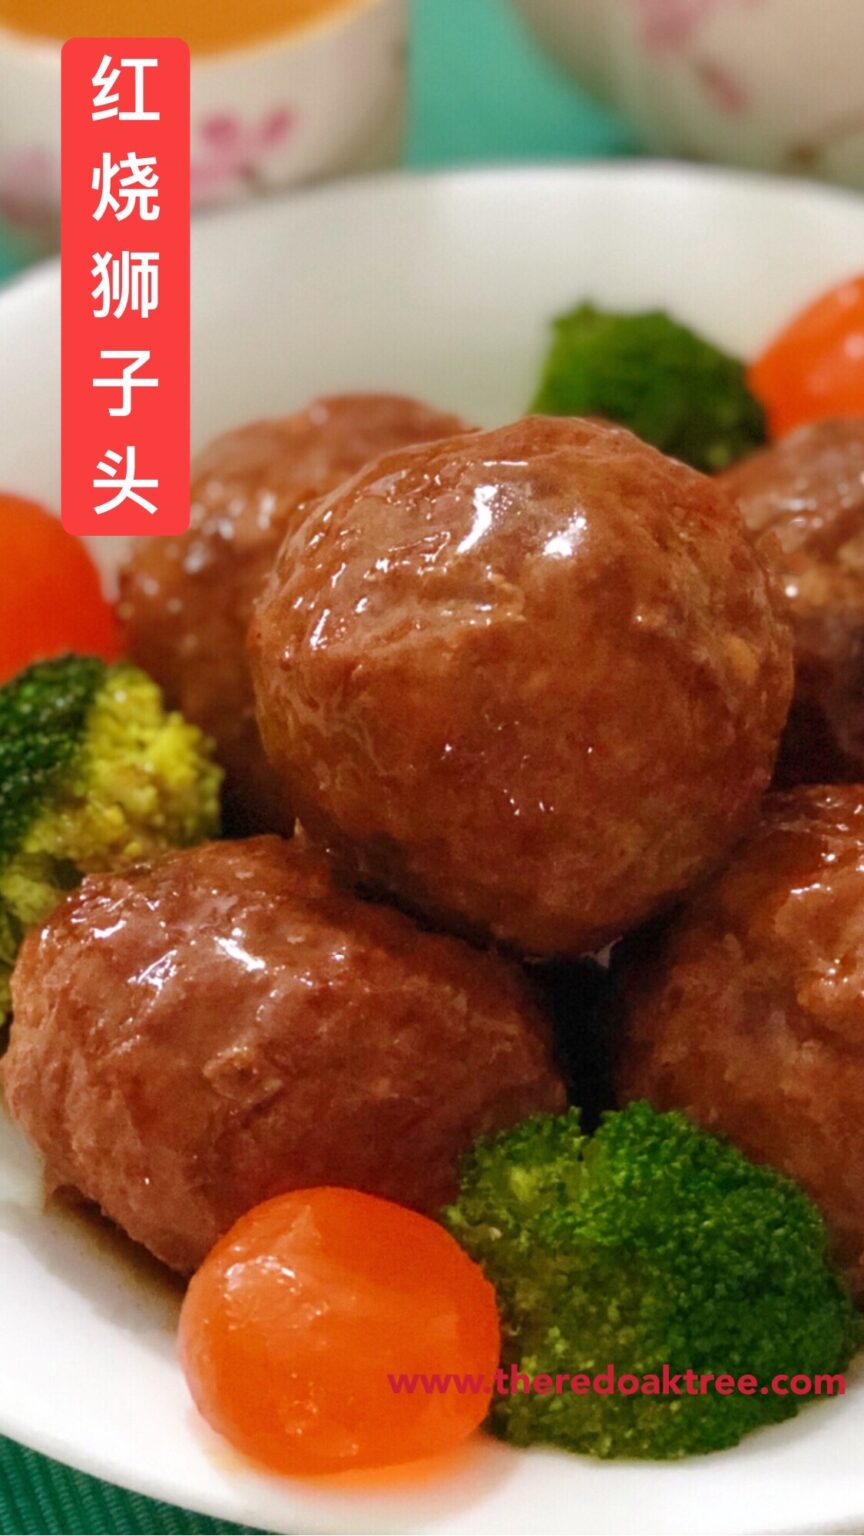 Lion Head Meatballs : Four Happiness Meatballs - The Red Oak Tree